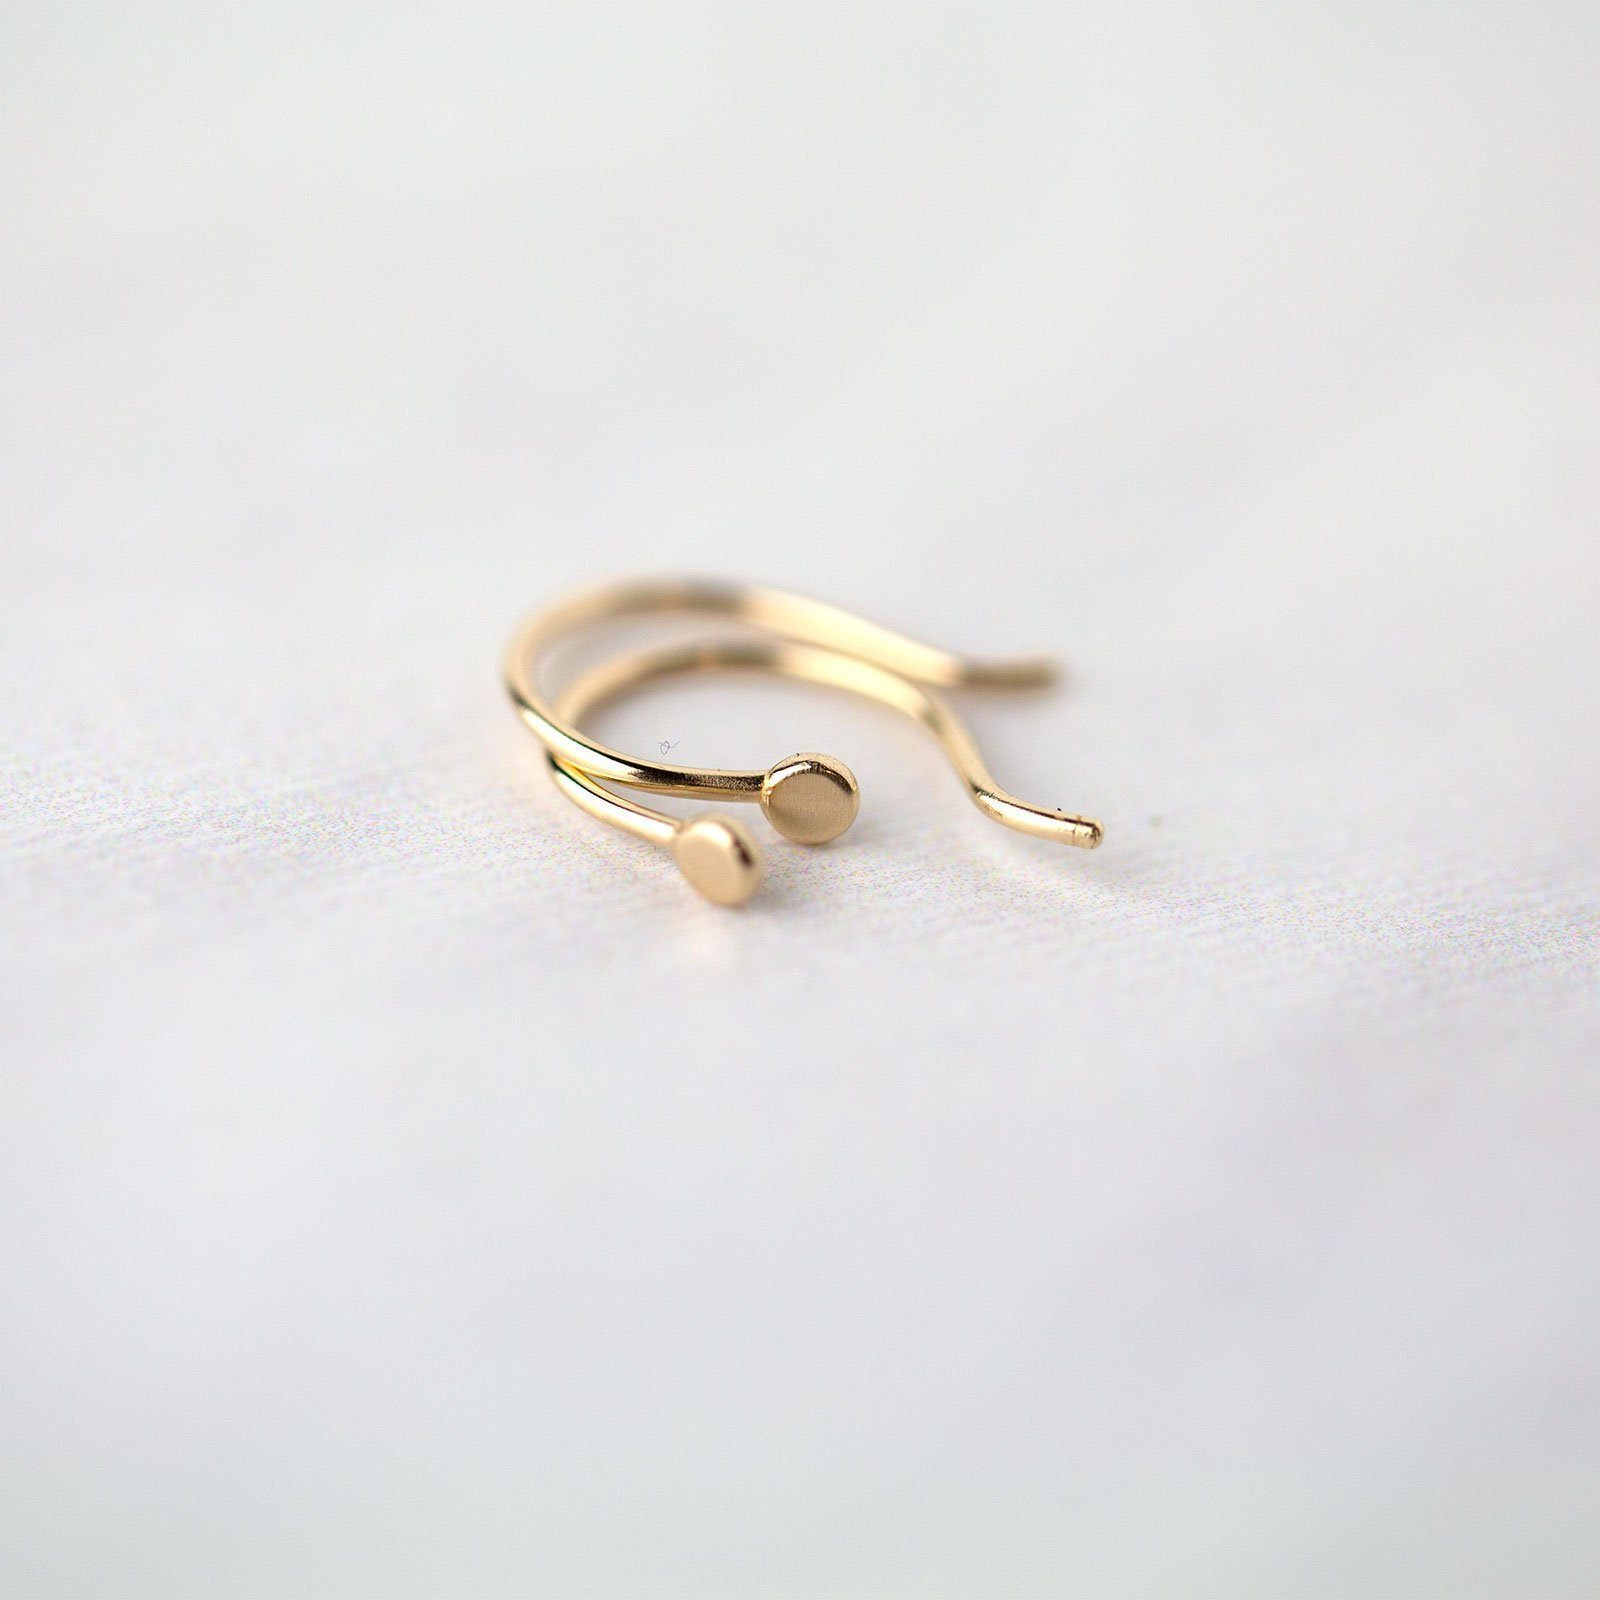 Mini Dew Drop Earrings - 14K Gold - Handmade Jewelry by Burnish